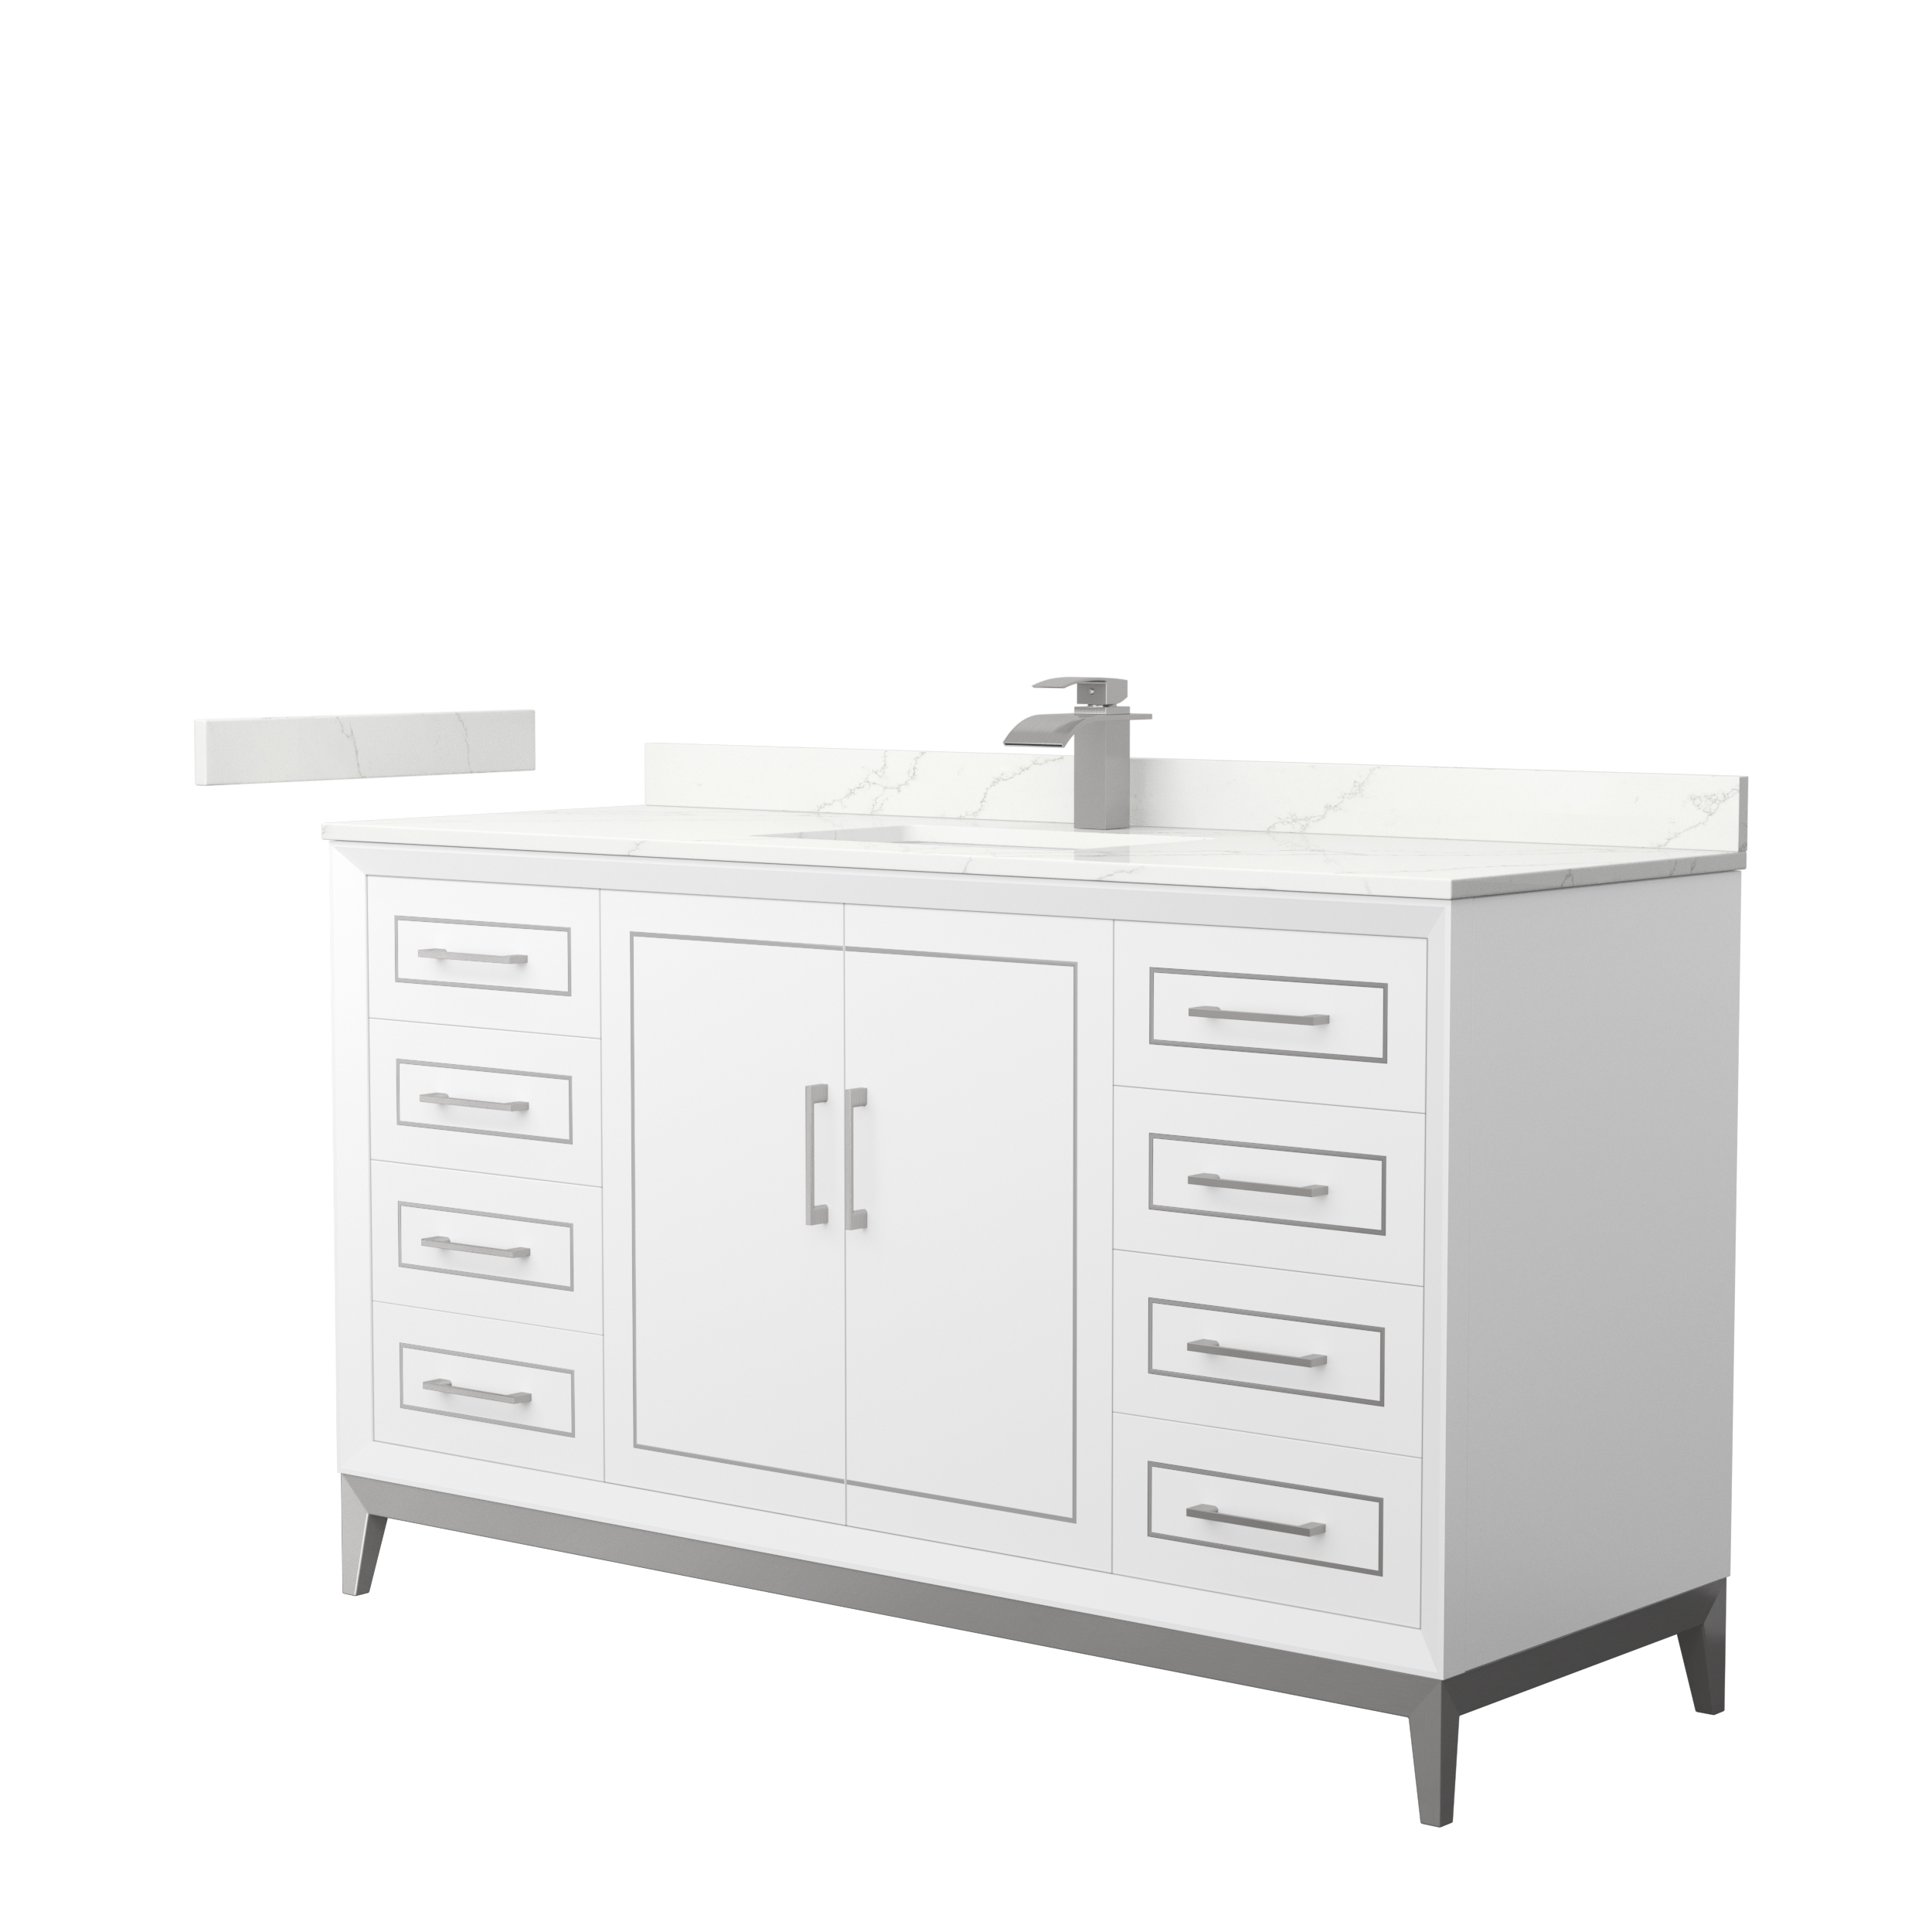 Marlena 60" Single Vanity with optional Quartz or Carrara Marble Counter - White WC-5151-60-SGL-VAN-WHT_